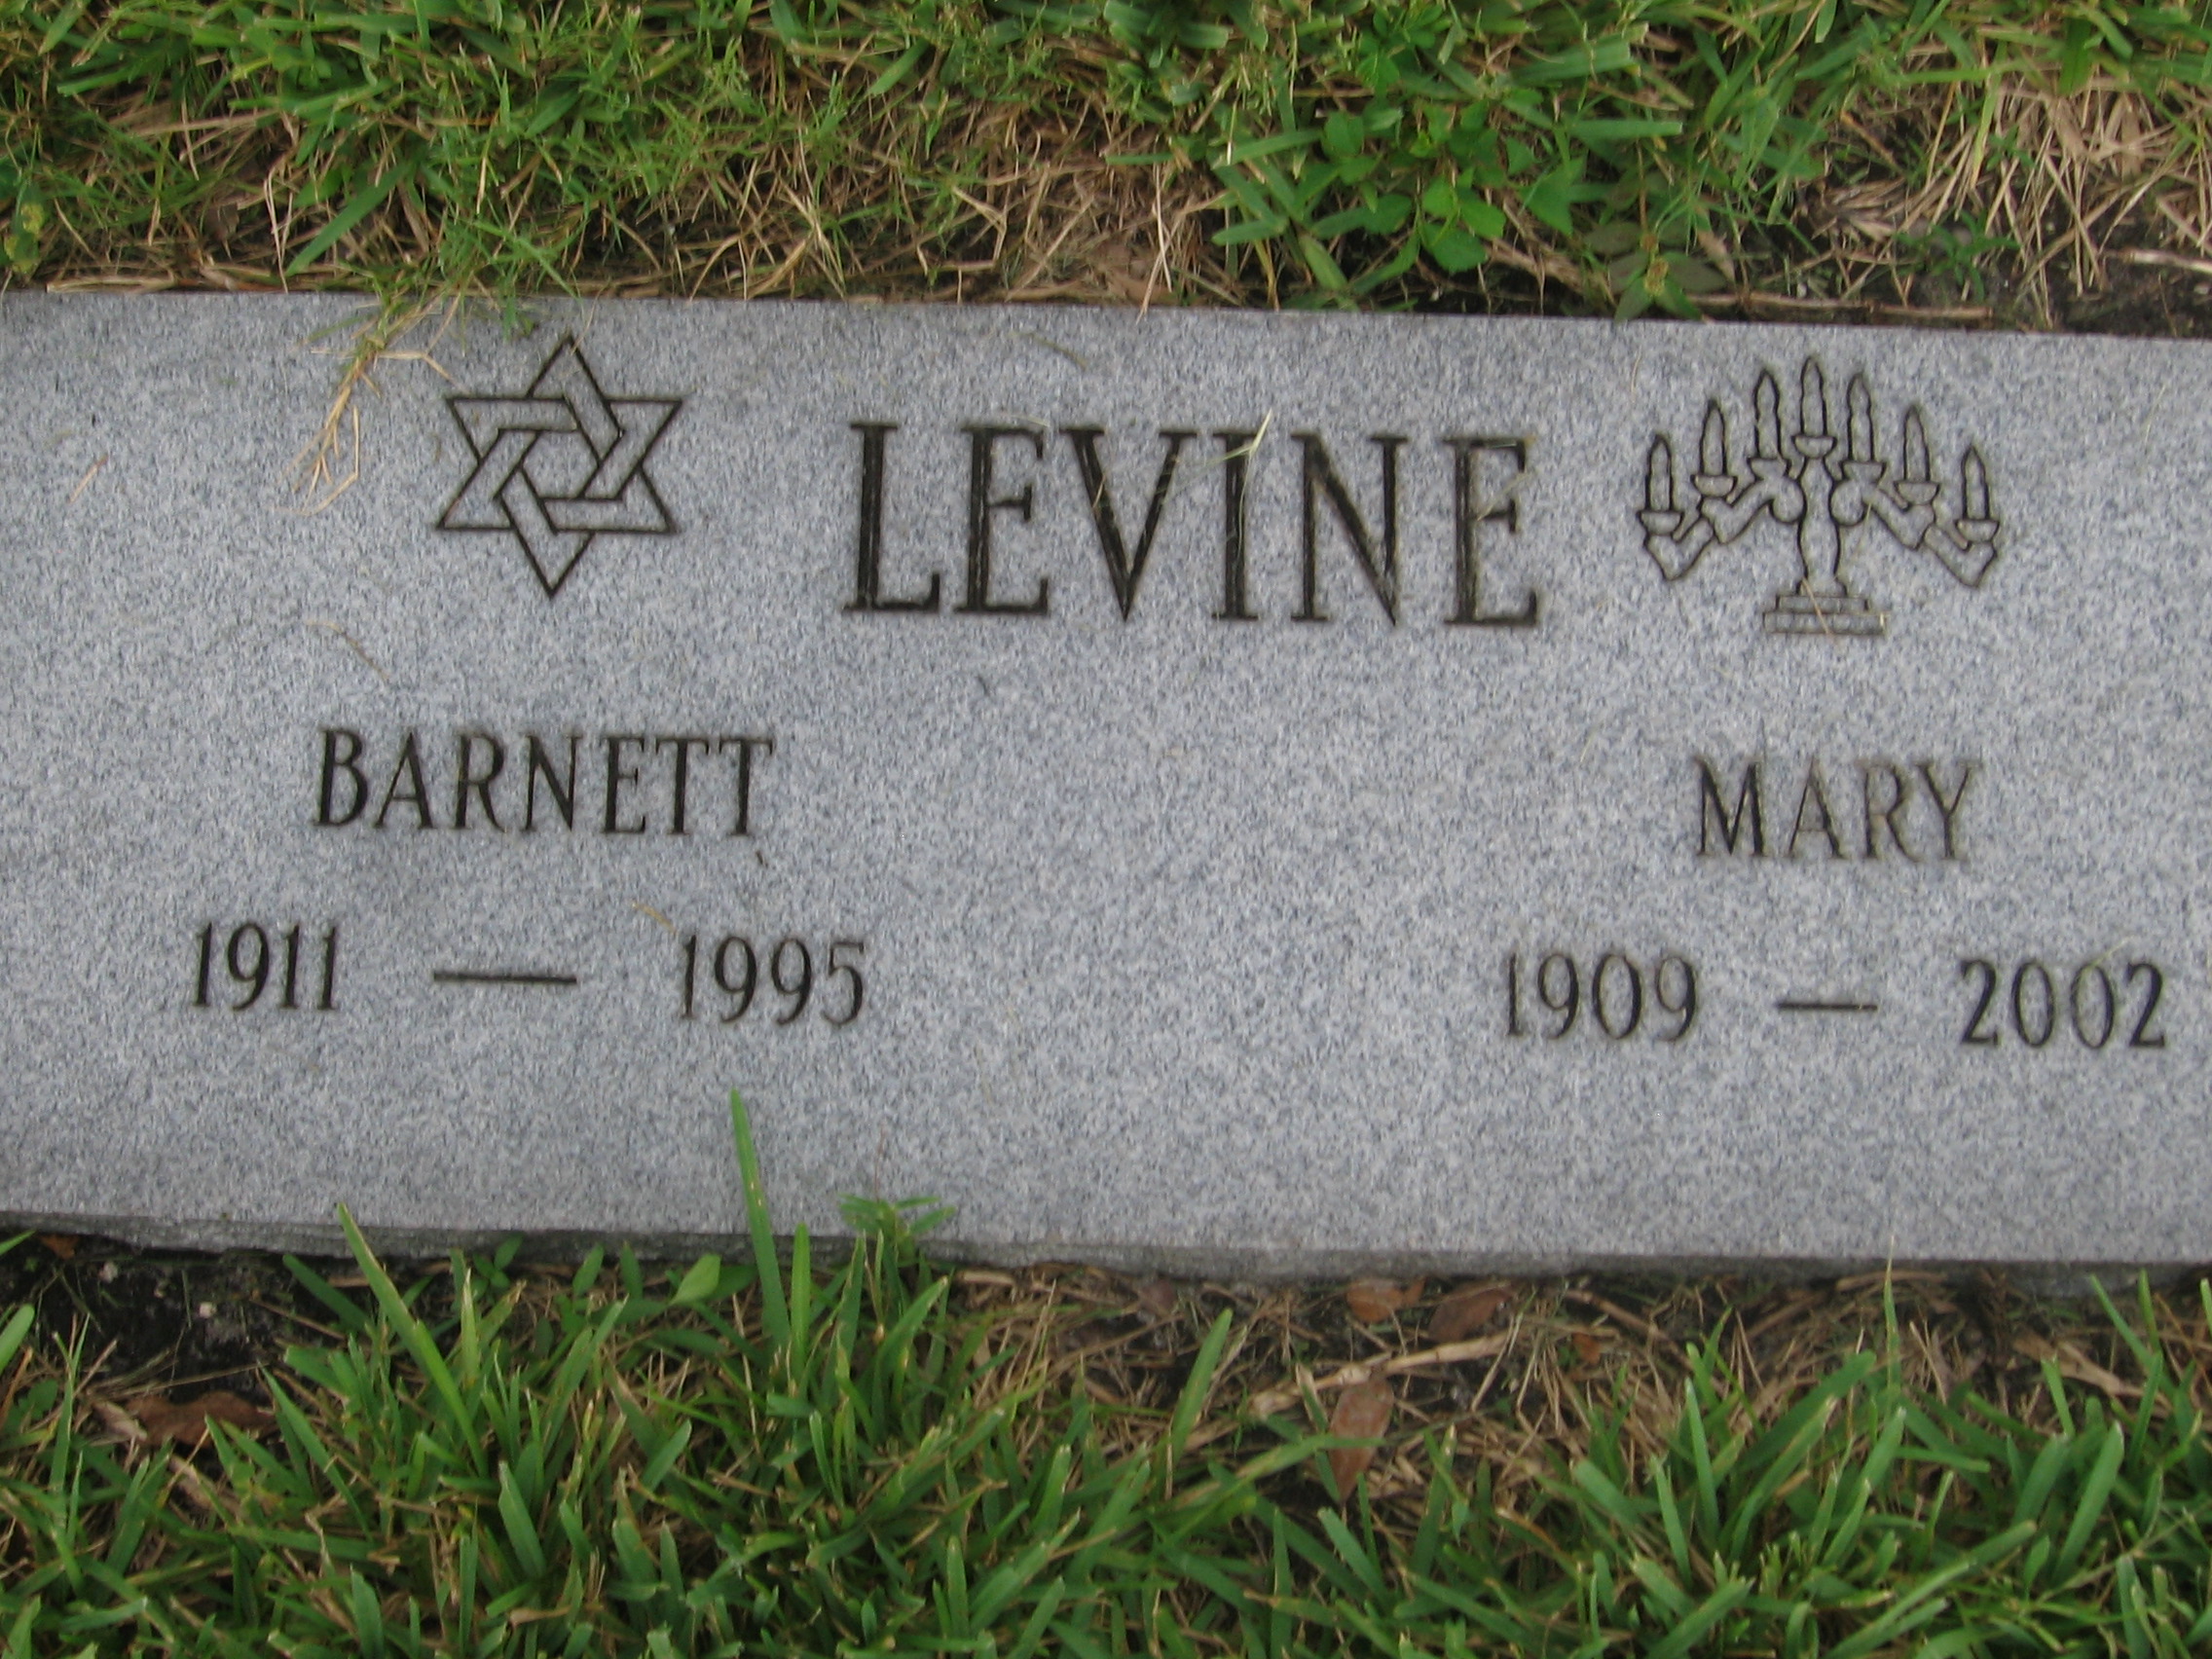 Mary Levine